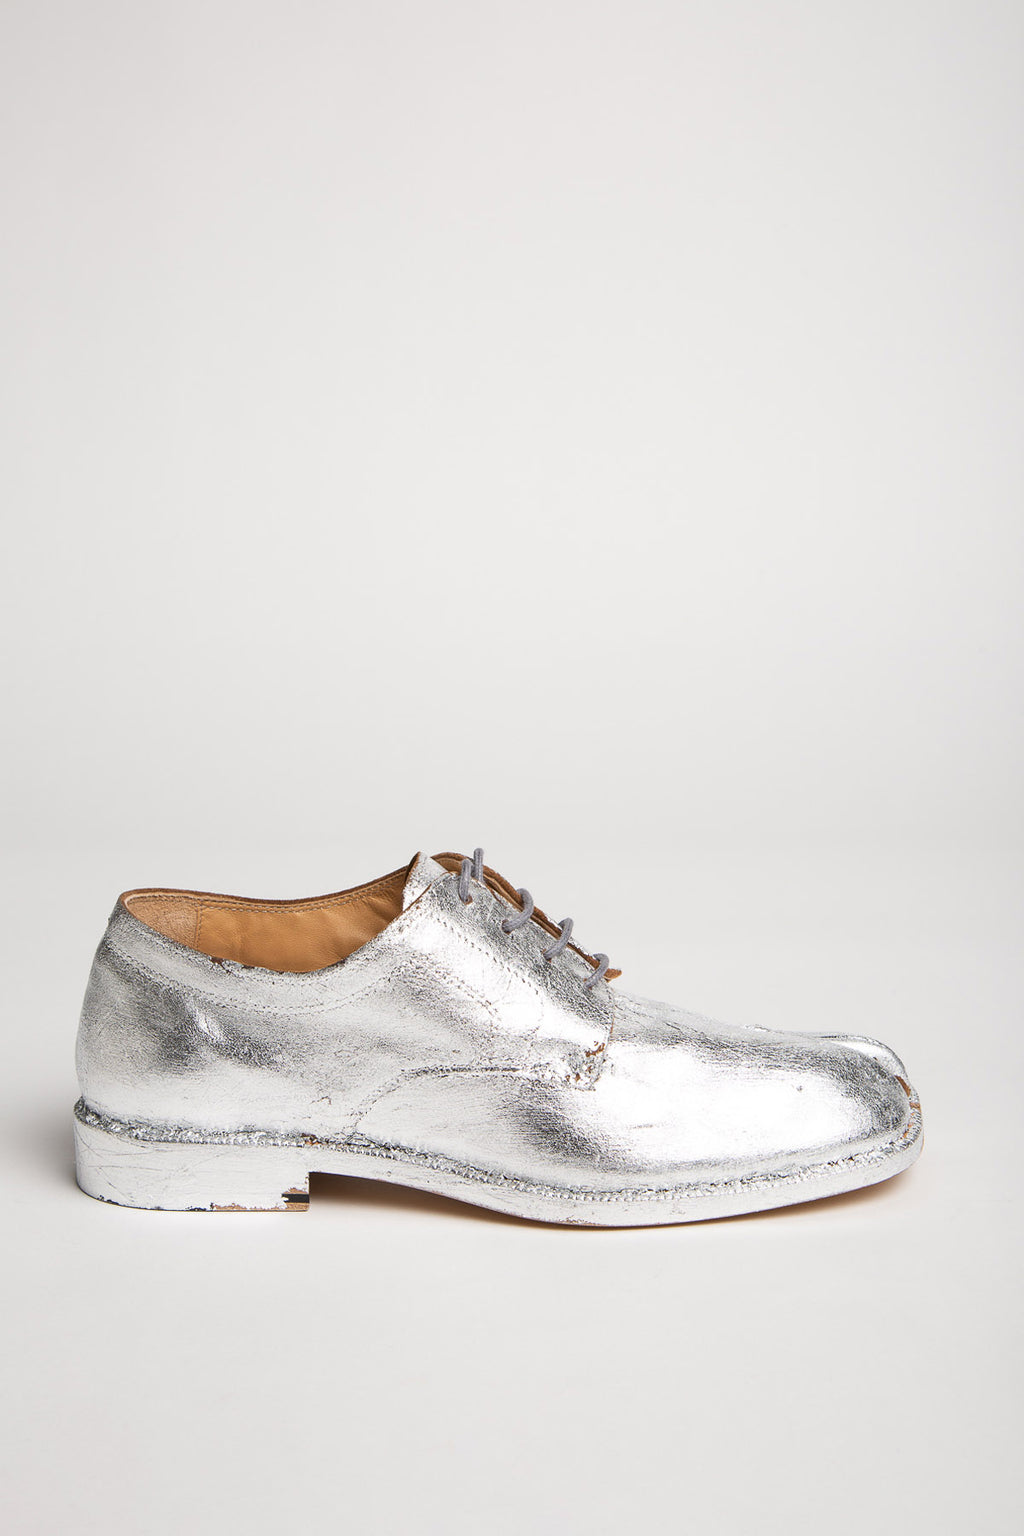 Maison Margiela Metallic Silver Tabi Lace-Up Shoes